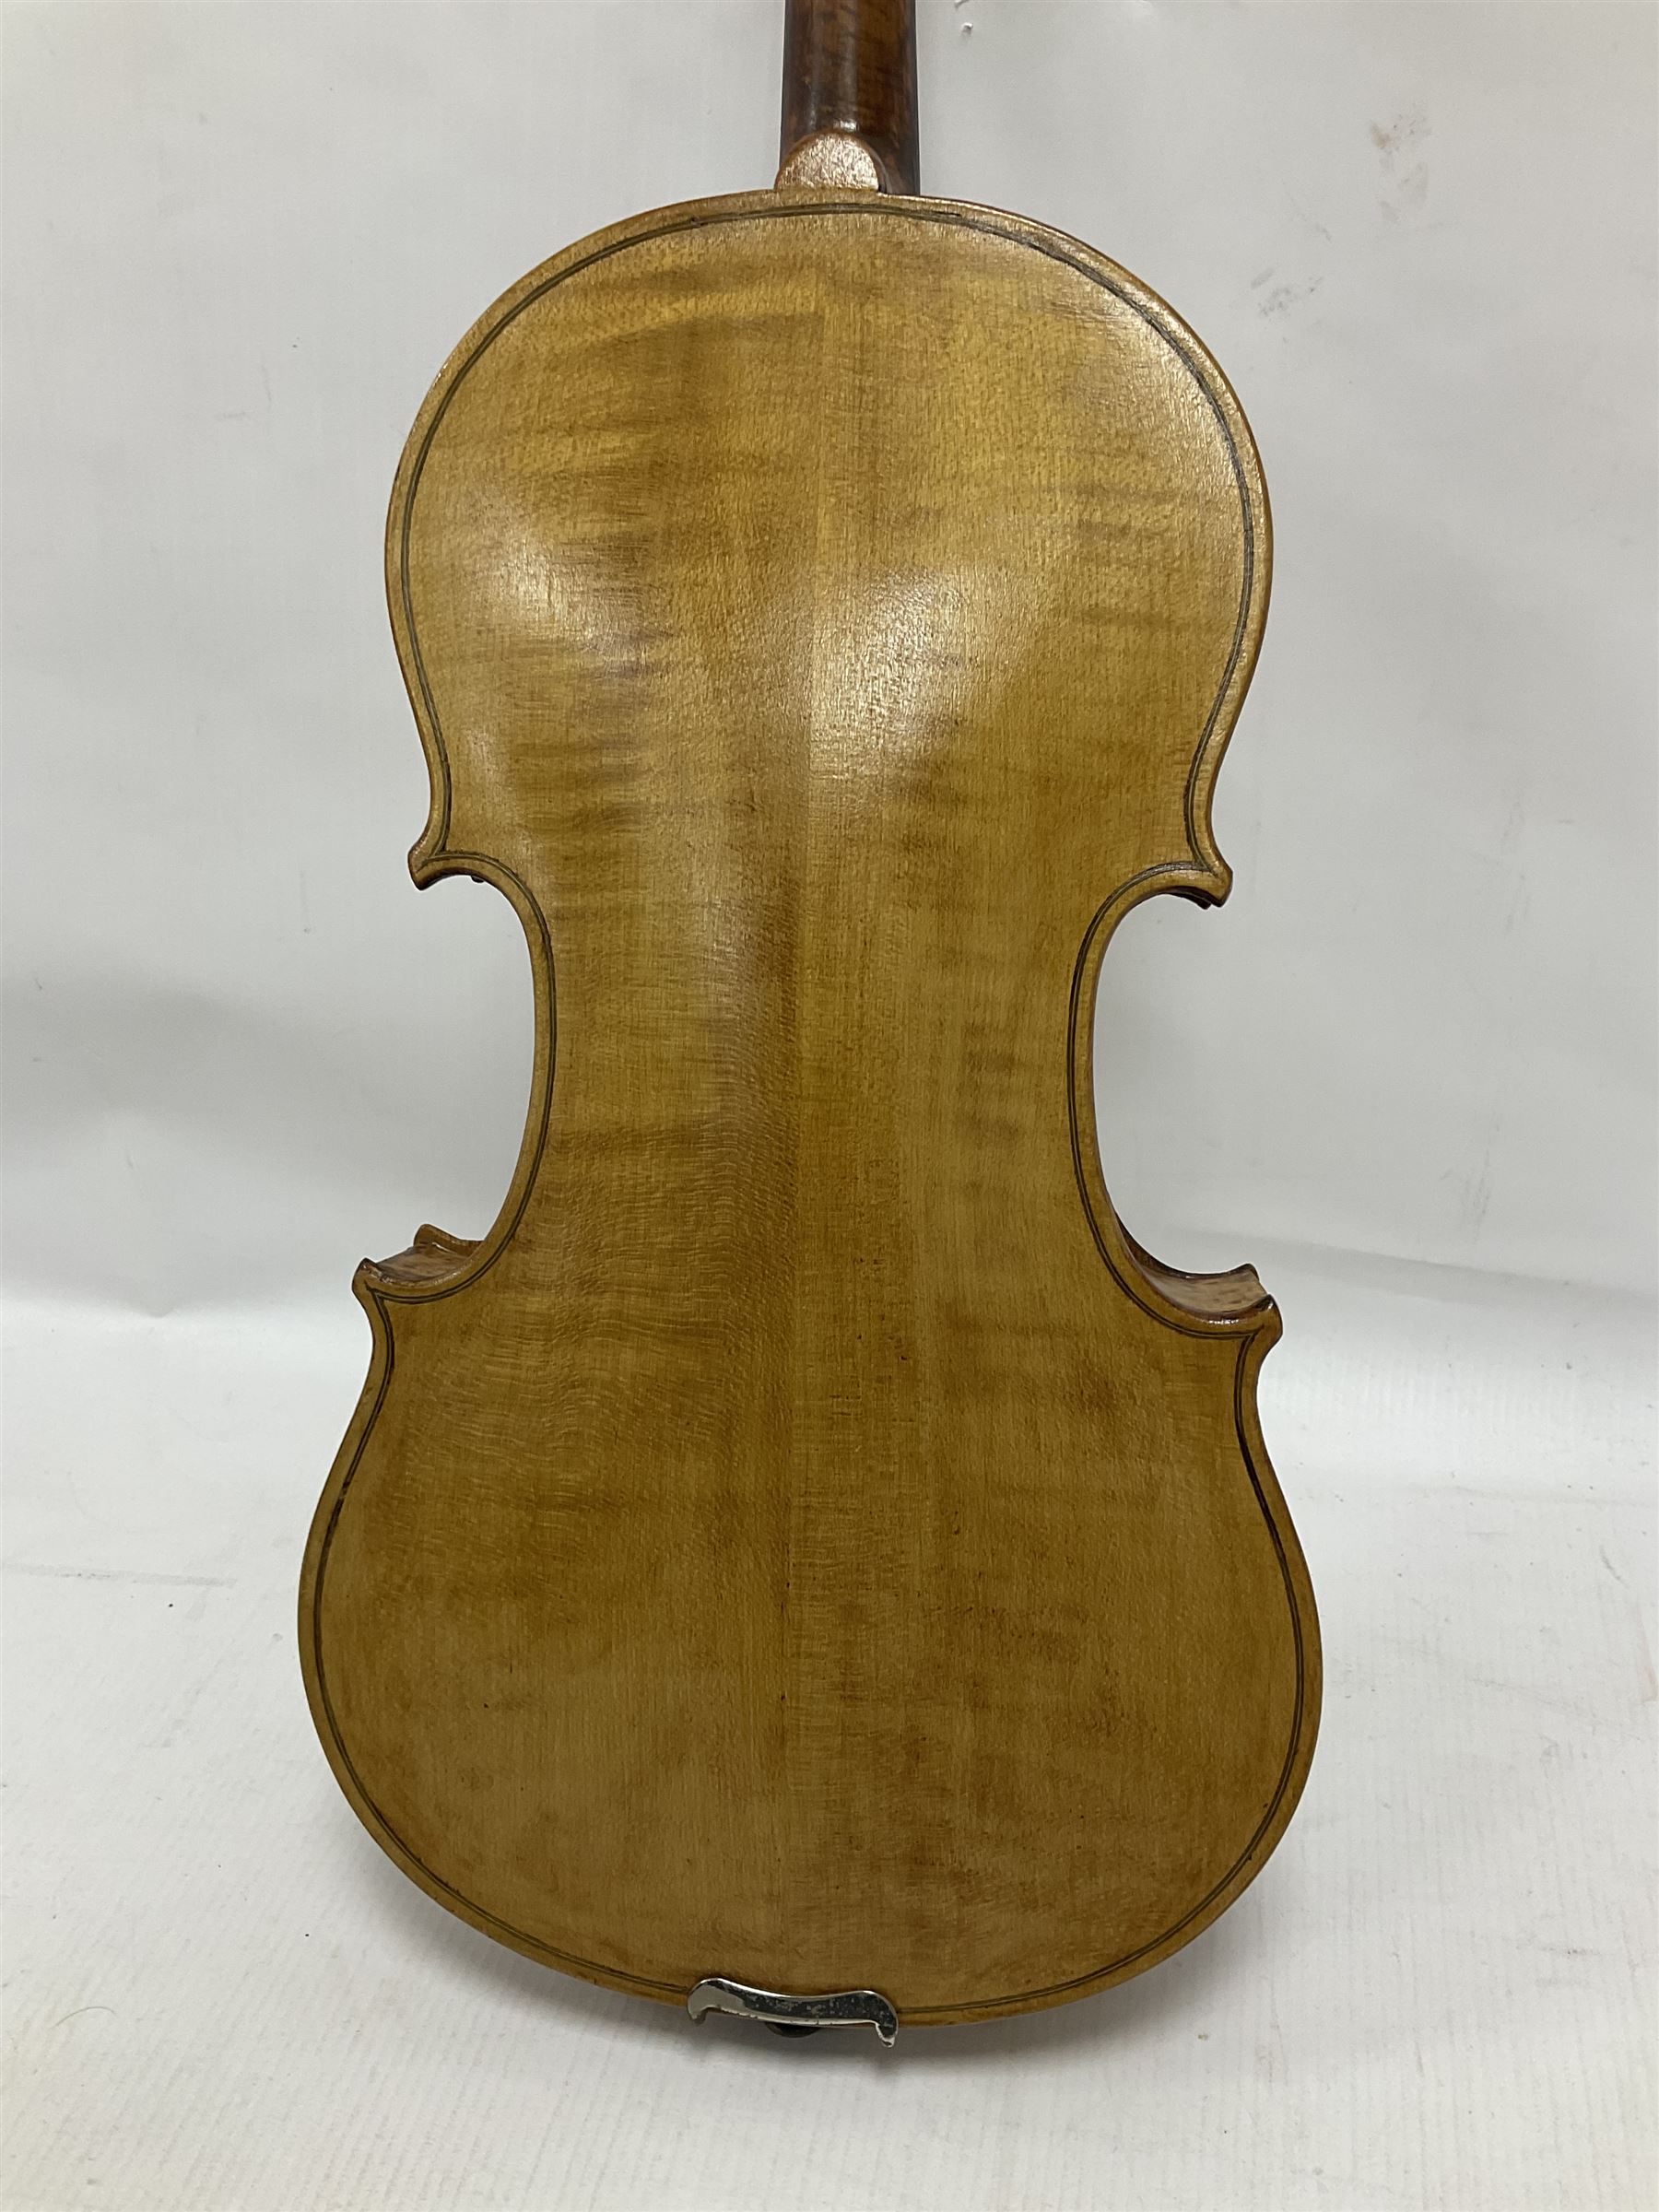 Copy of a full size Stradivarius violin - Image 11 of 12